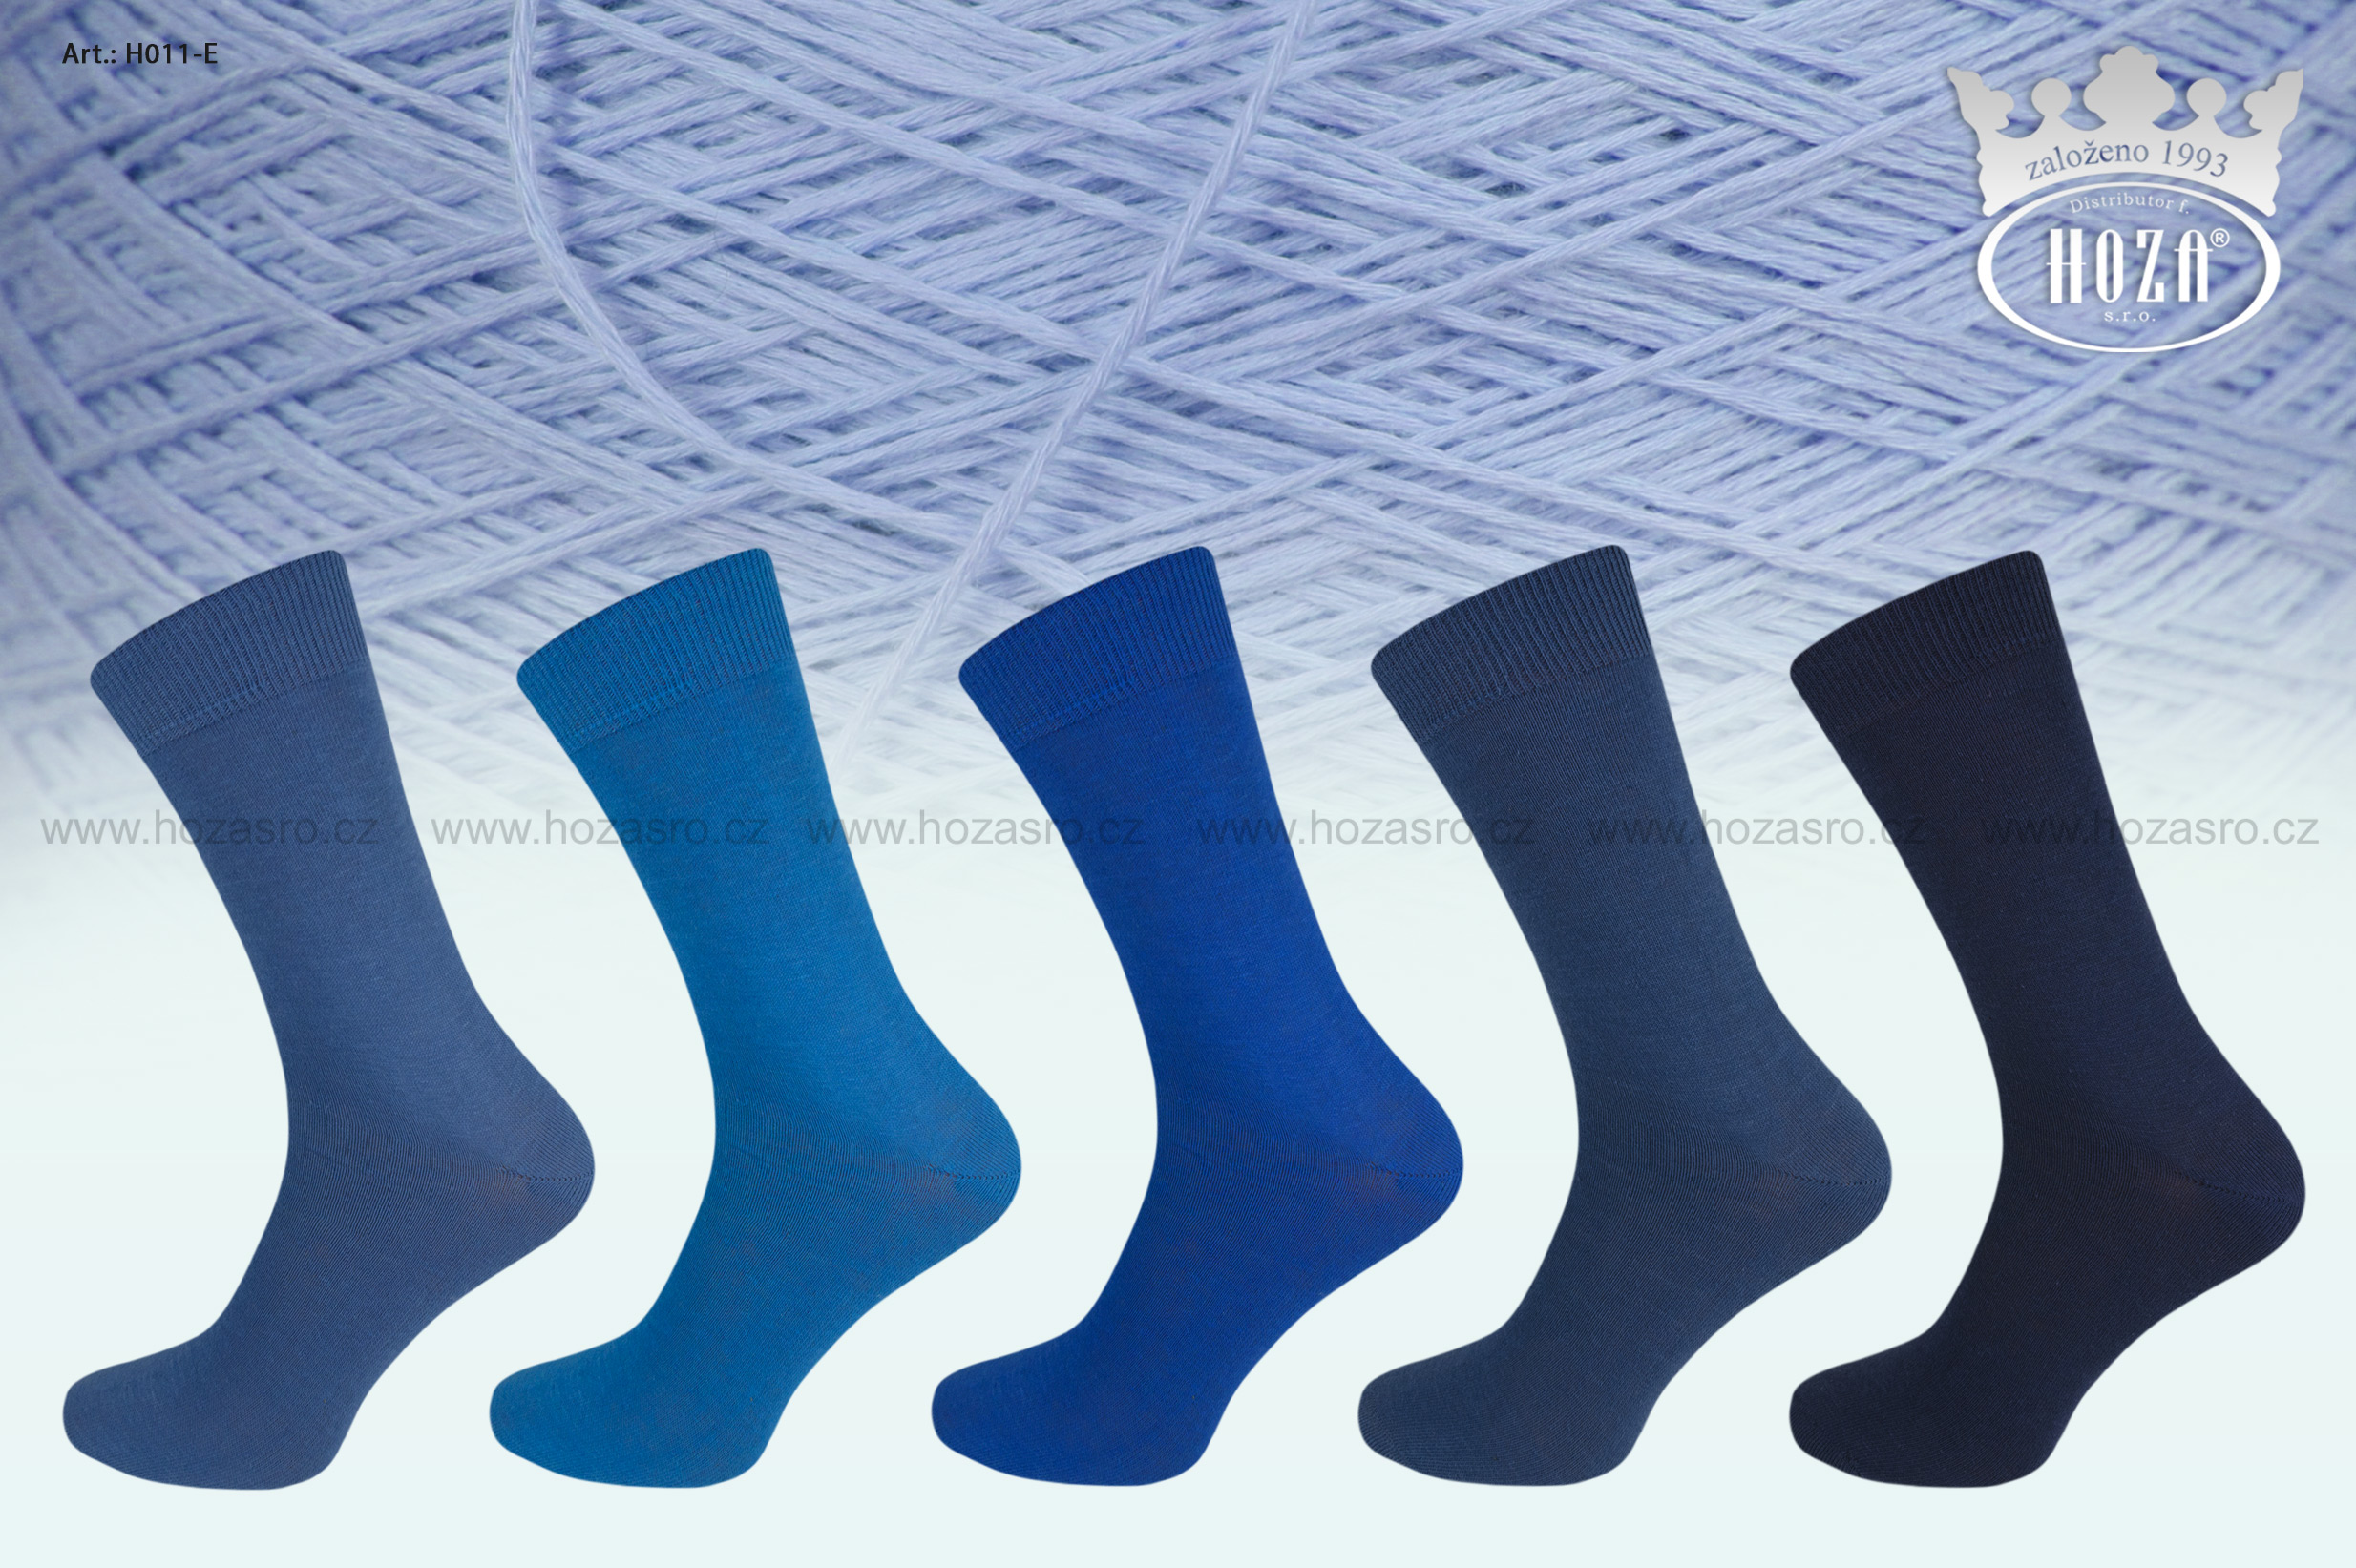 Pánské ponožky hladké, 100% bavlna - modrý mix - H011-E